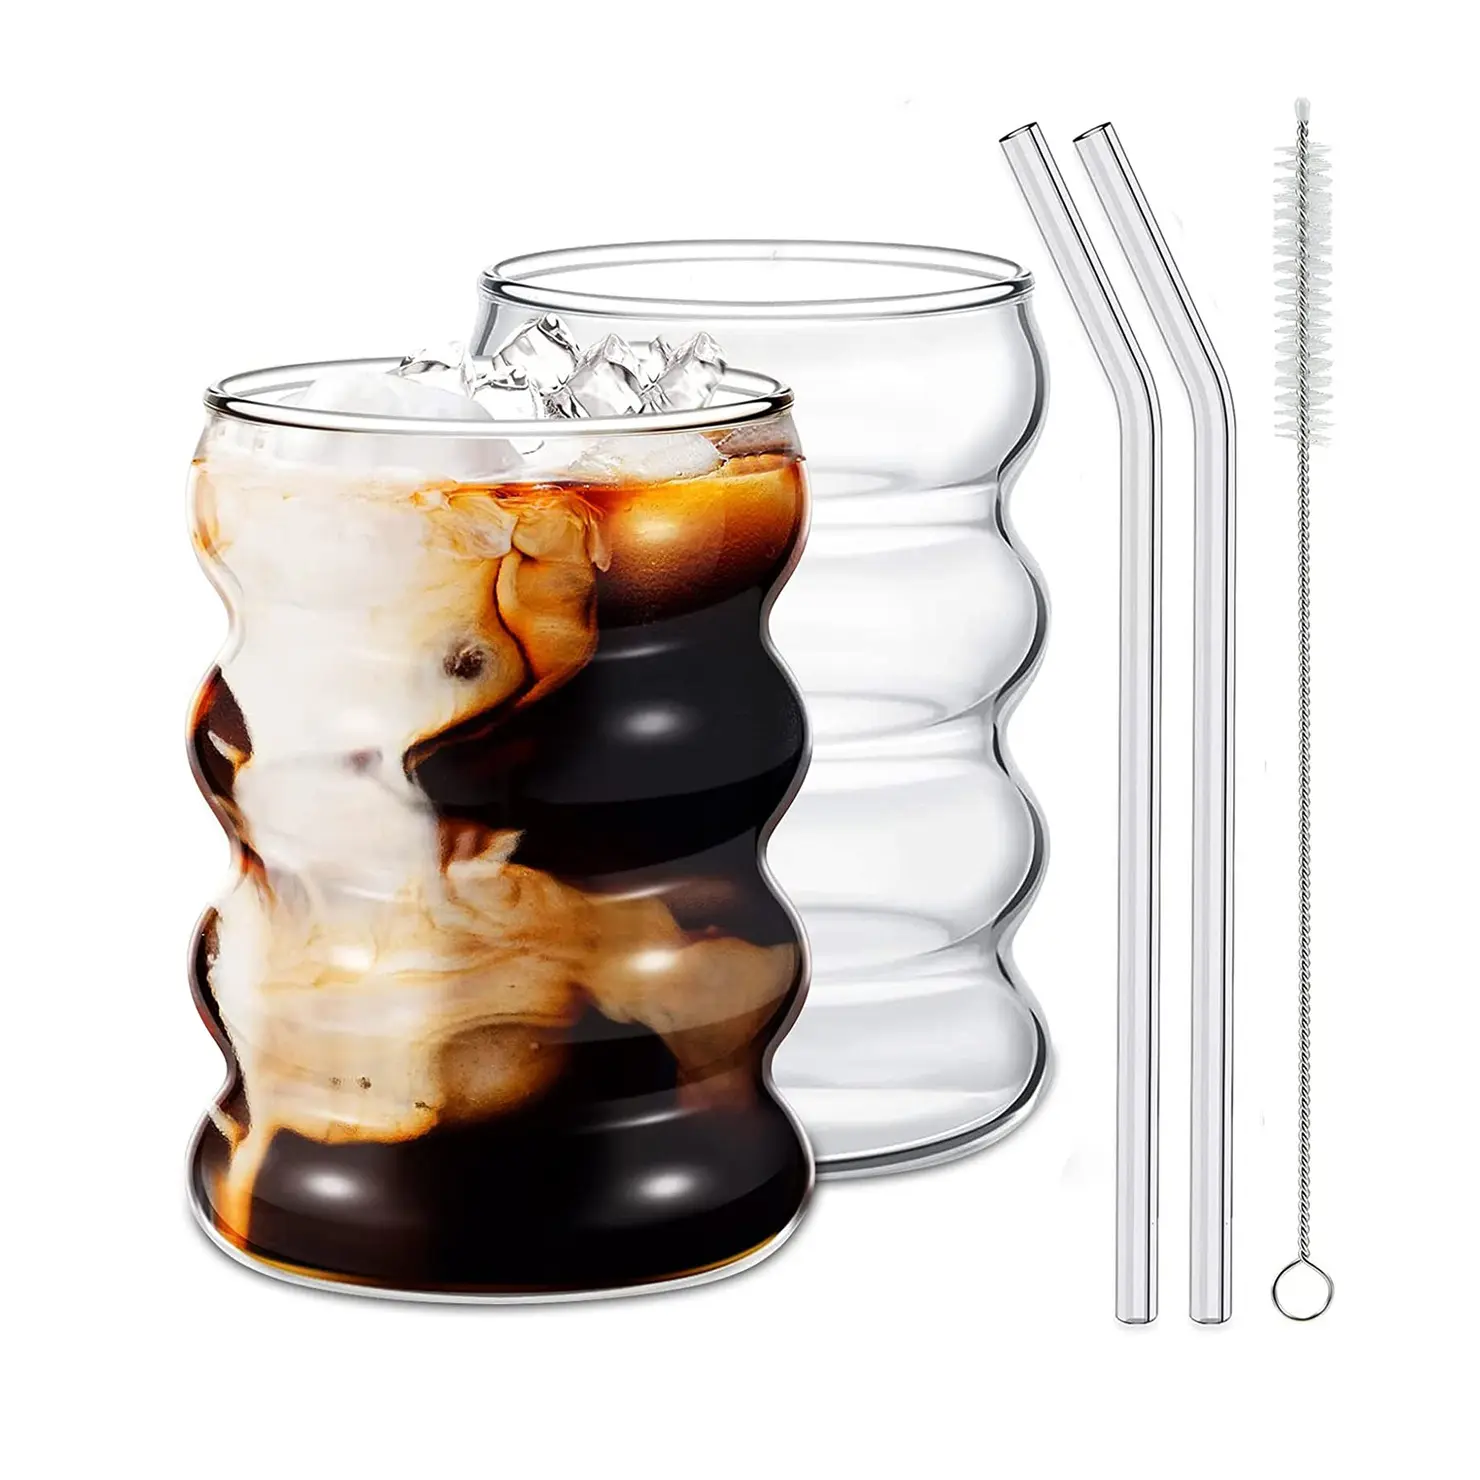 Set cangkir kaca ulat borosilikat tinggi, perlengkapan gelas minuman kreatif lipat lapisan Spiral tunggal